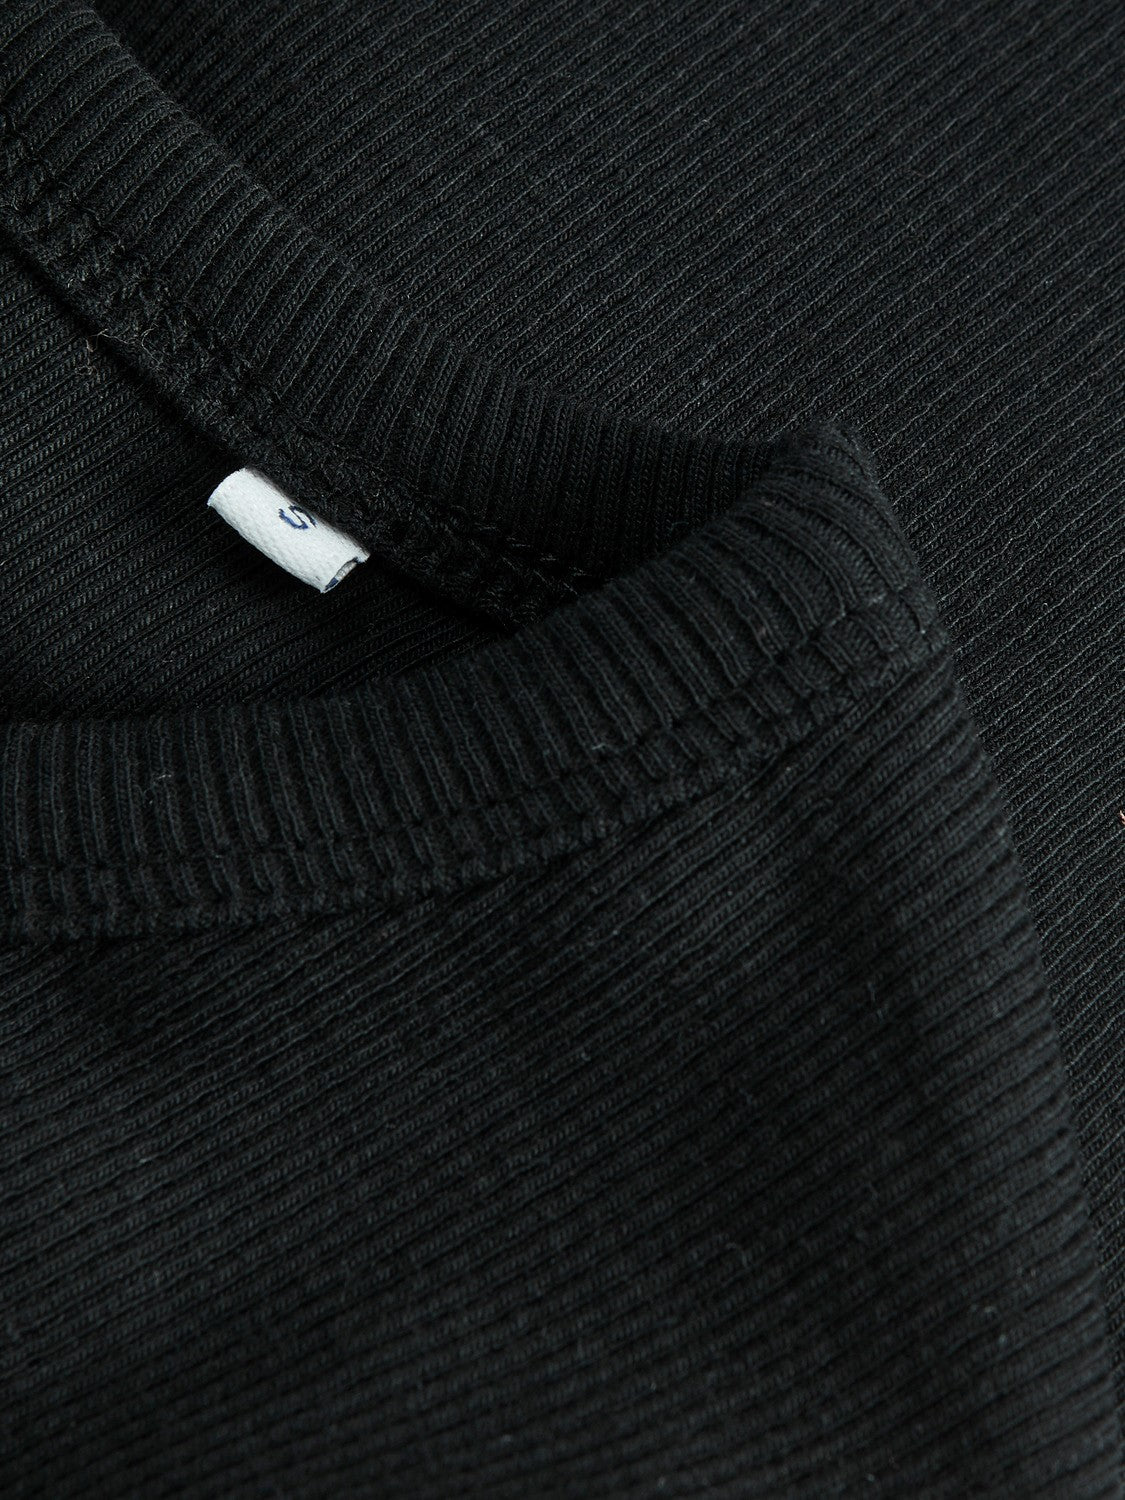 JXFELINE Crop Top Sweater Black 